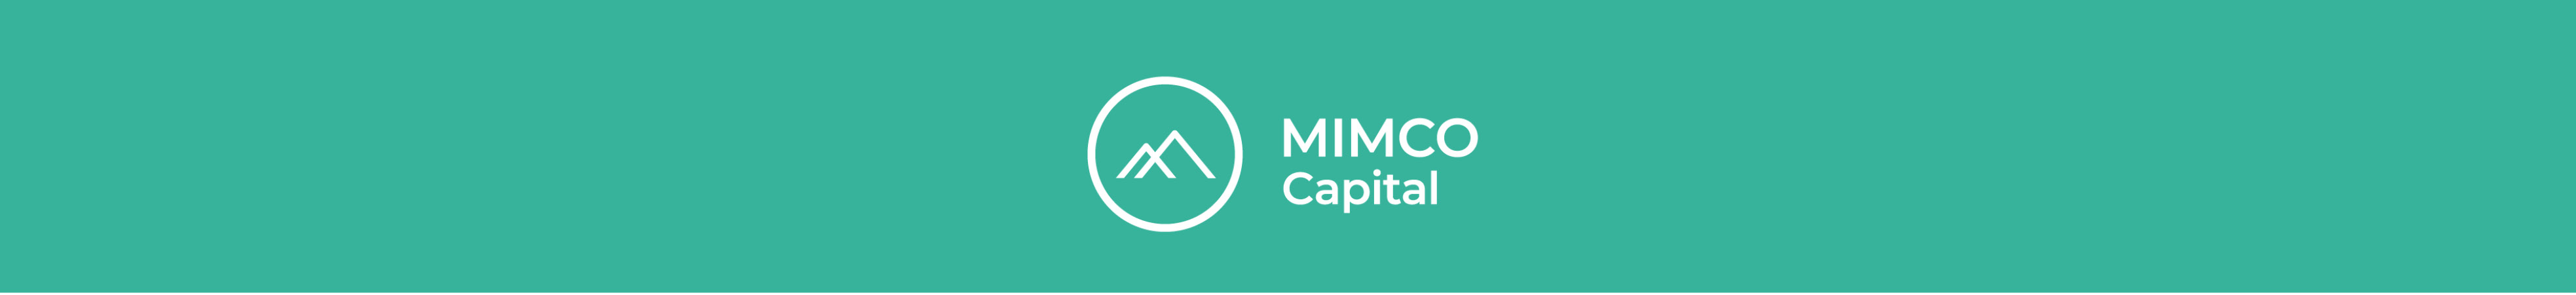 mimco-capital-h2a